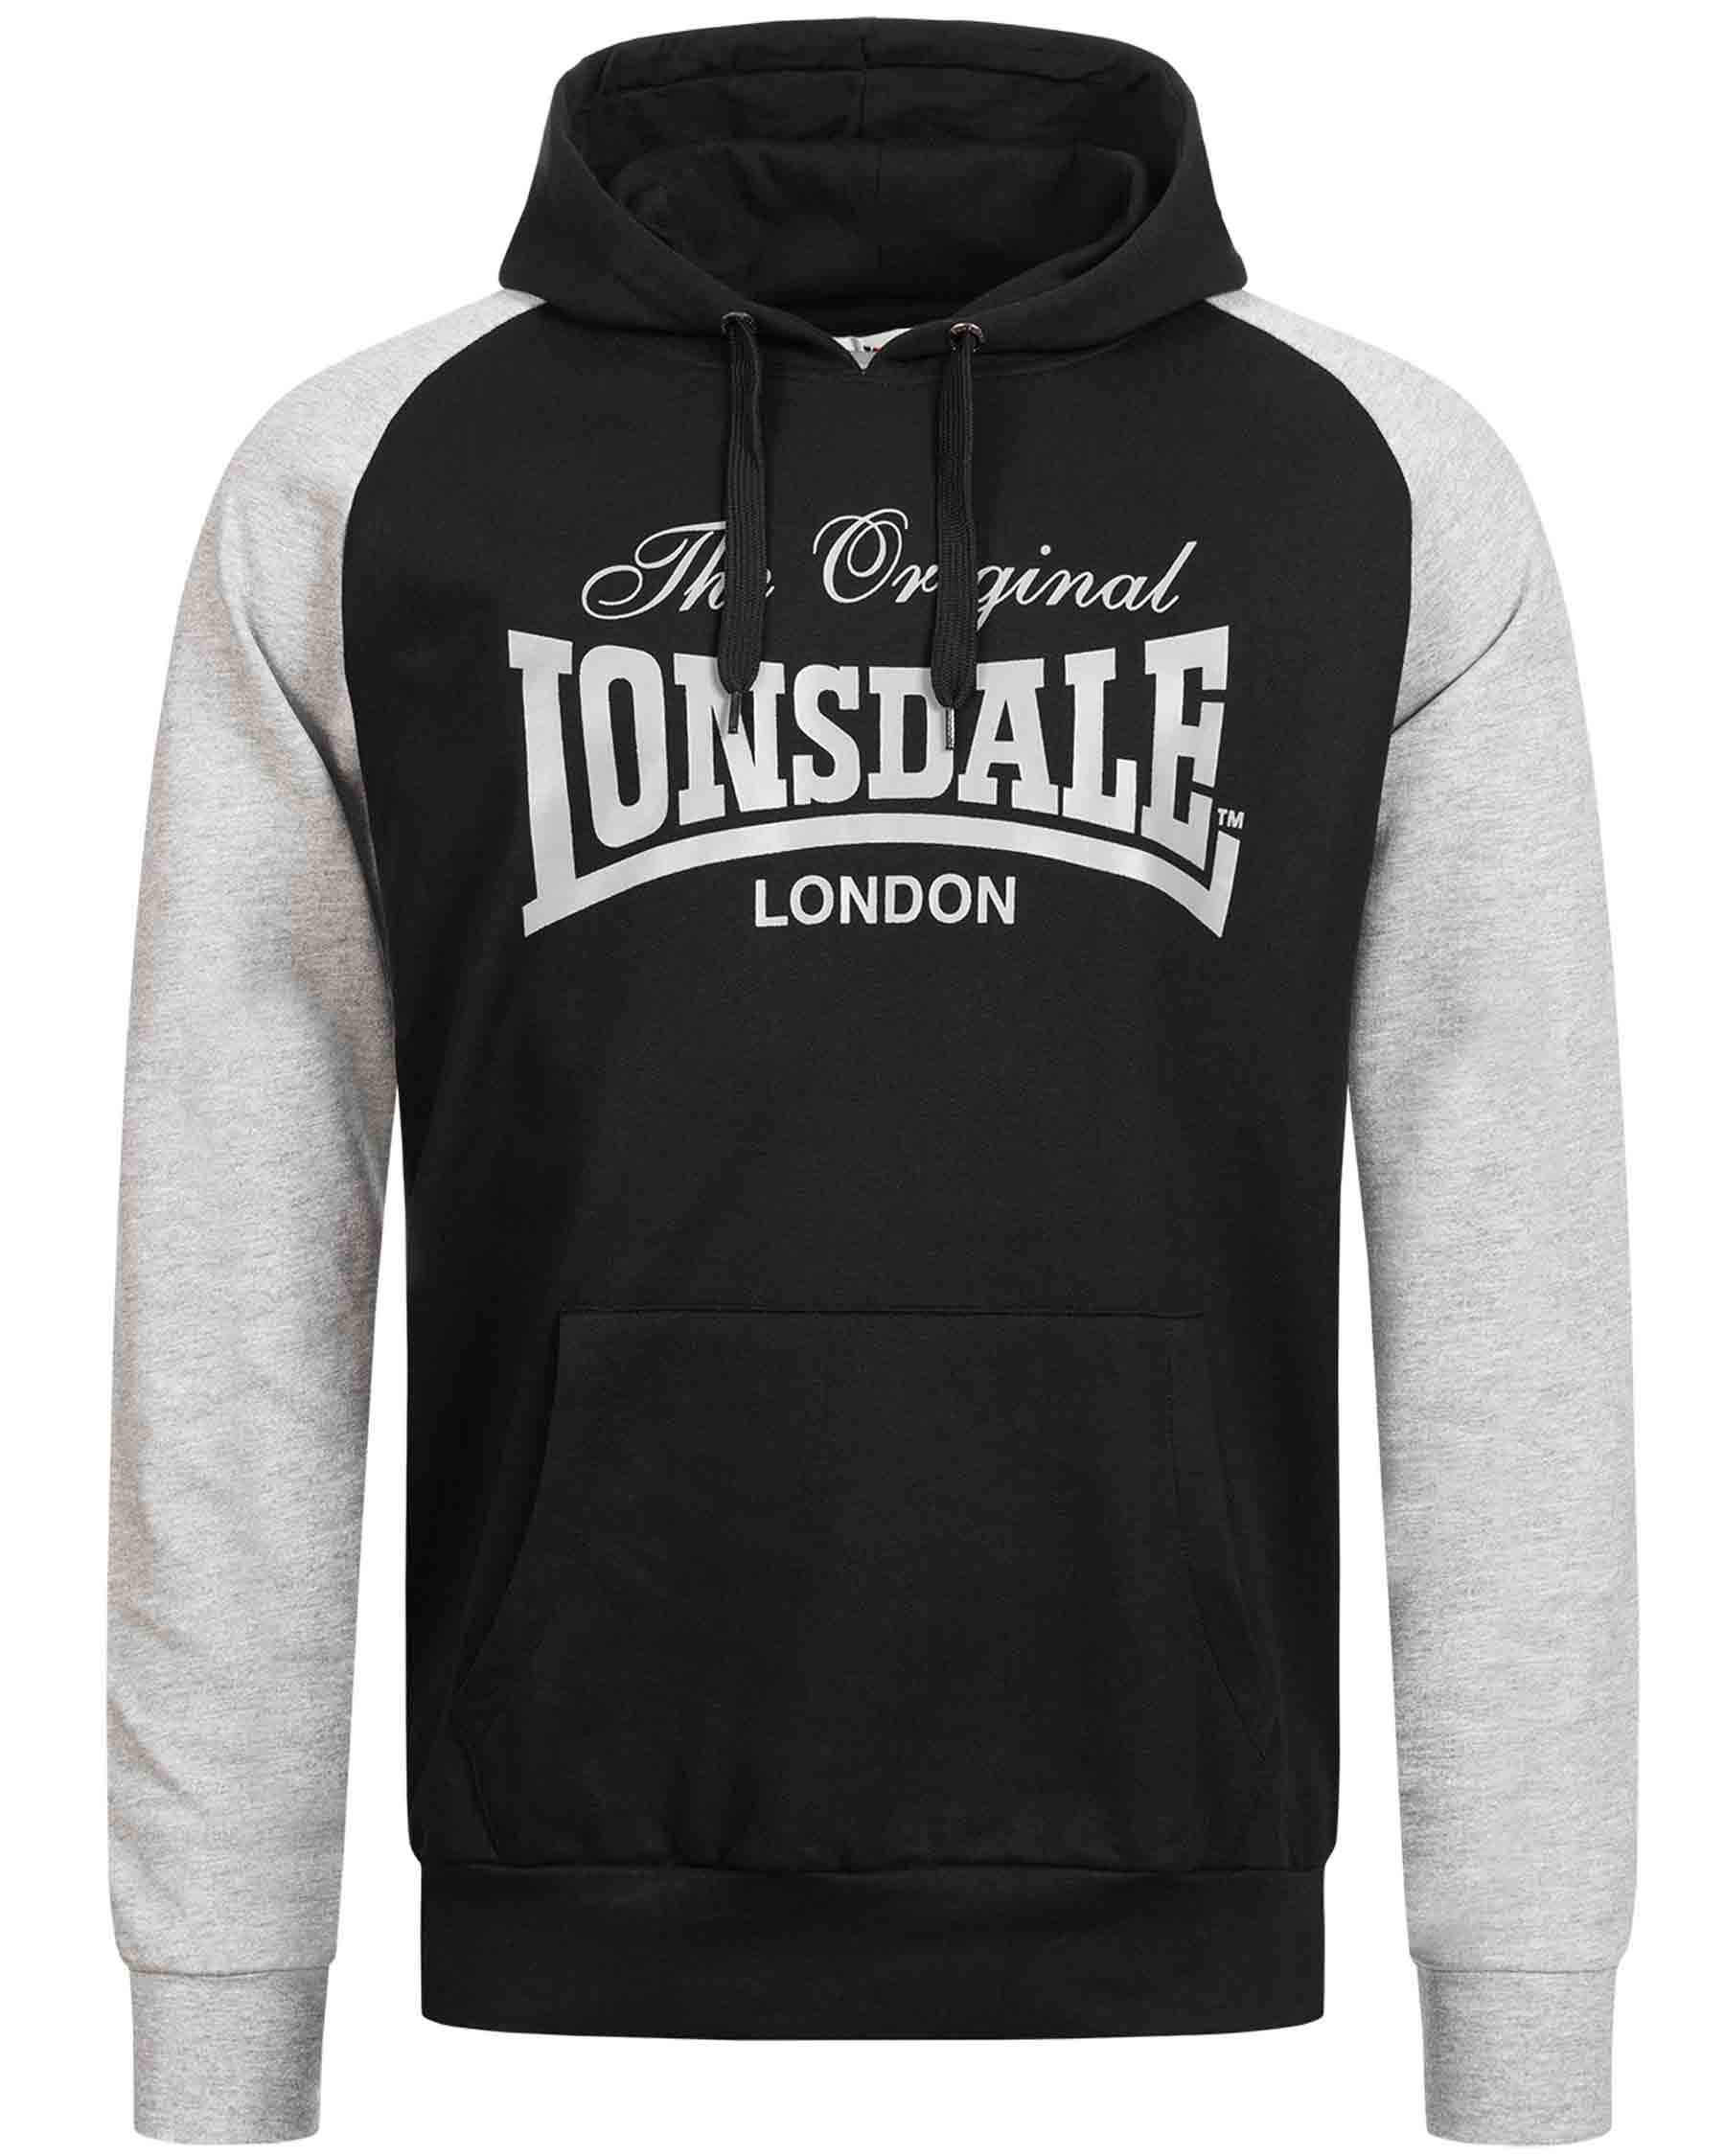 Lonsdale Regular fit hooded sweatshirt Brundall